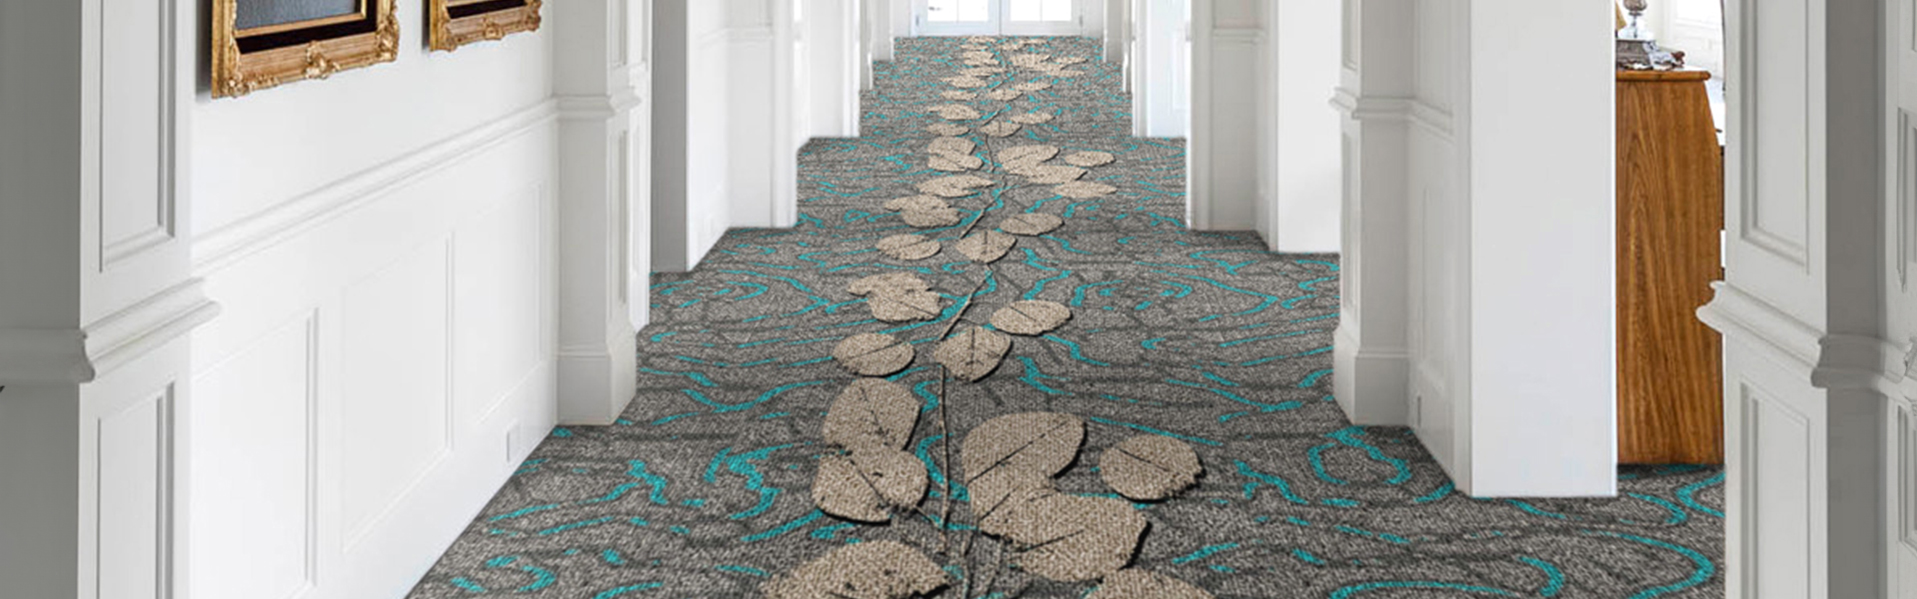 Hospitality Carpet Tile